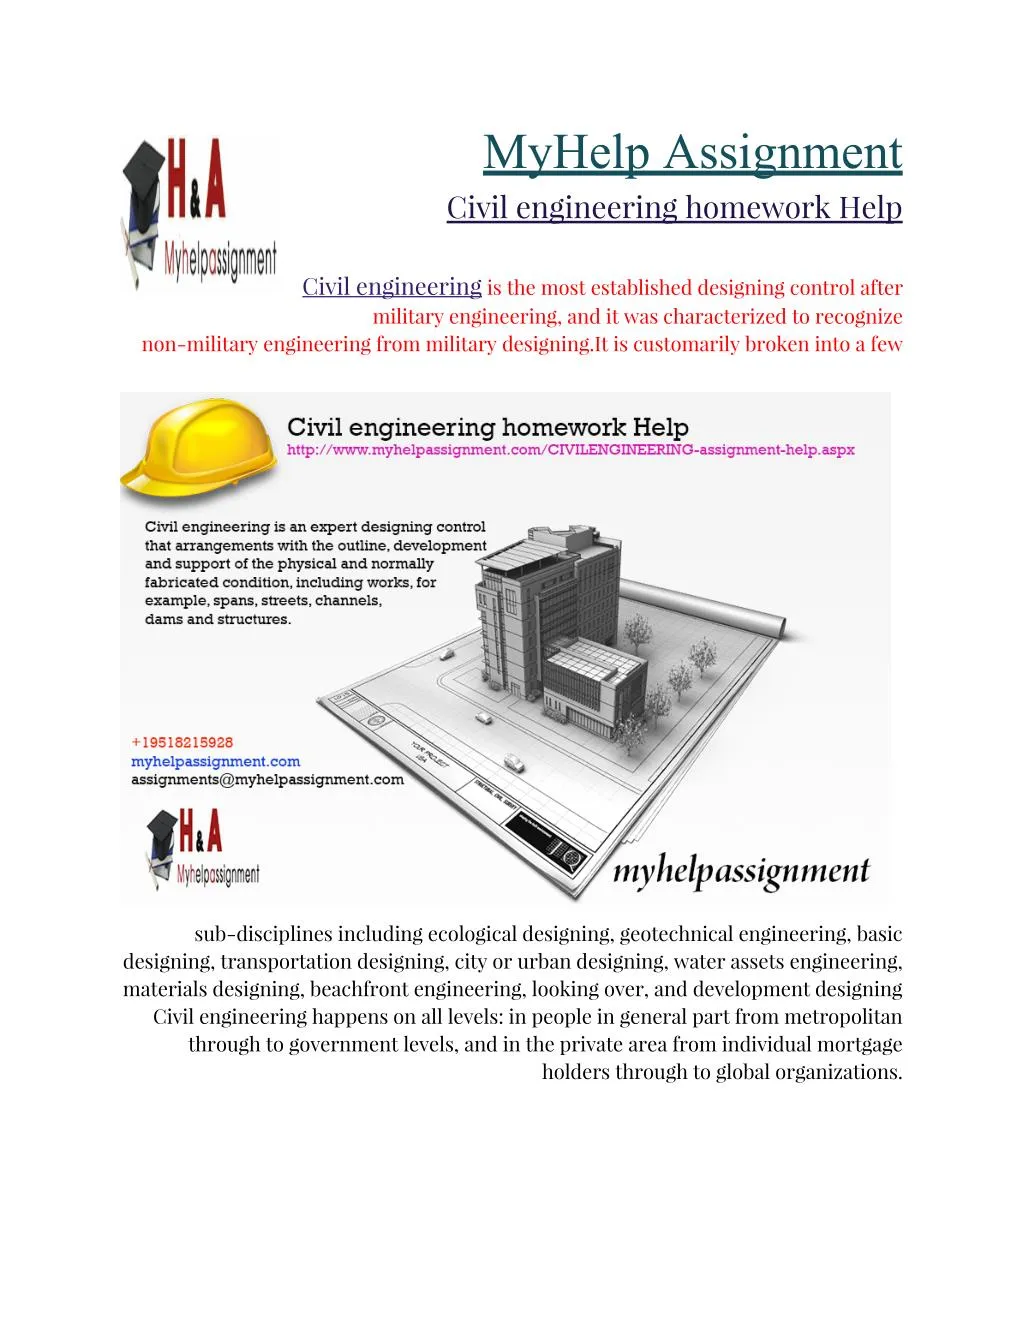 myhelp assignment civil engineering homework help